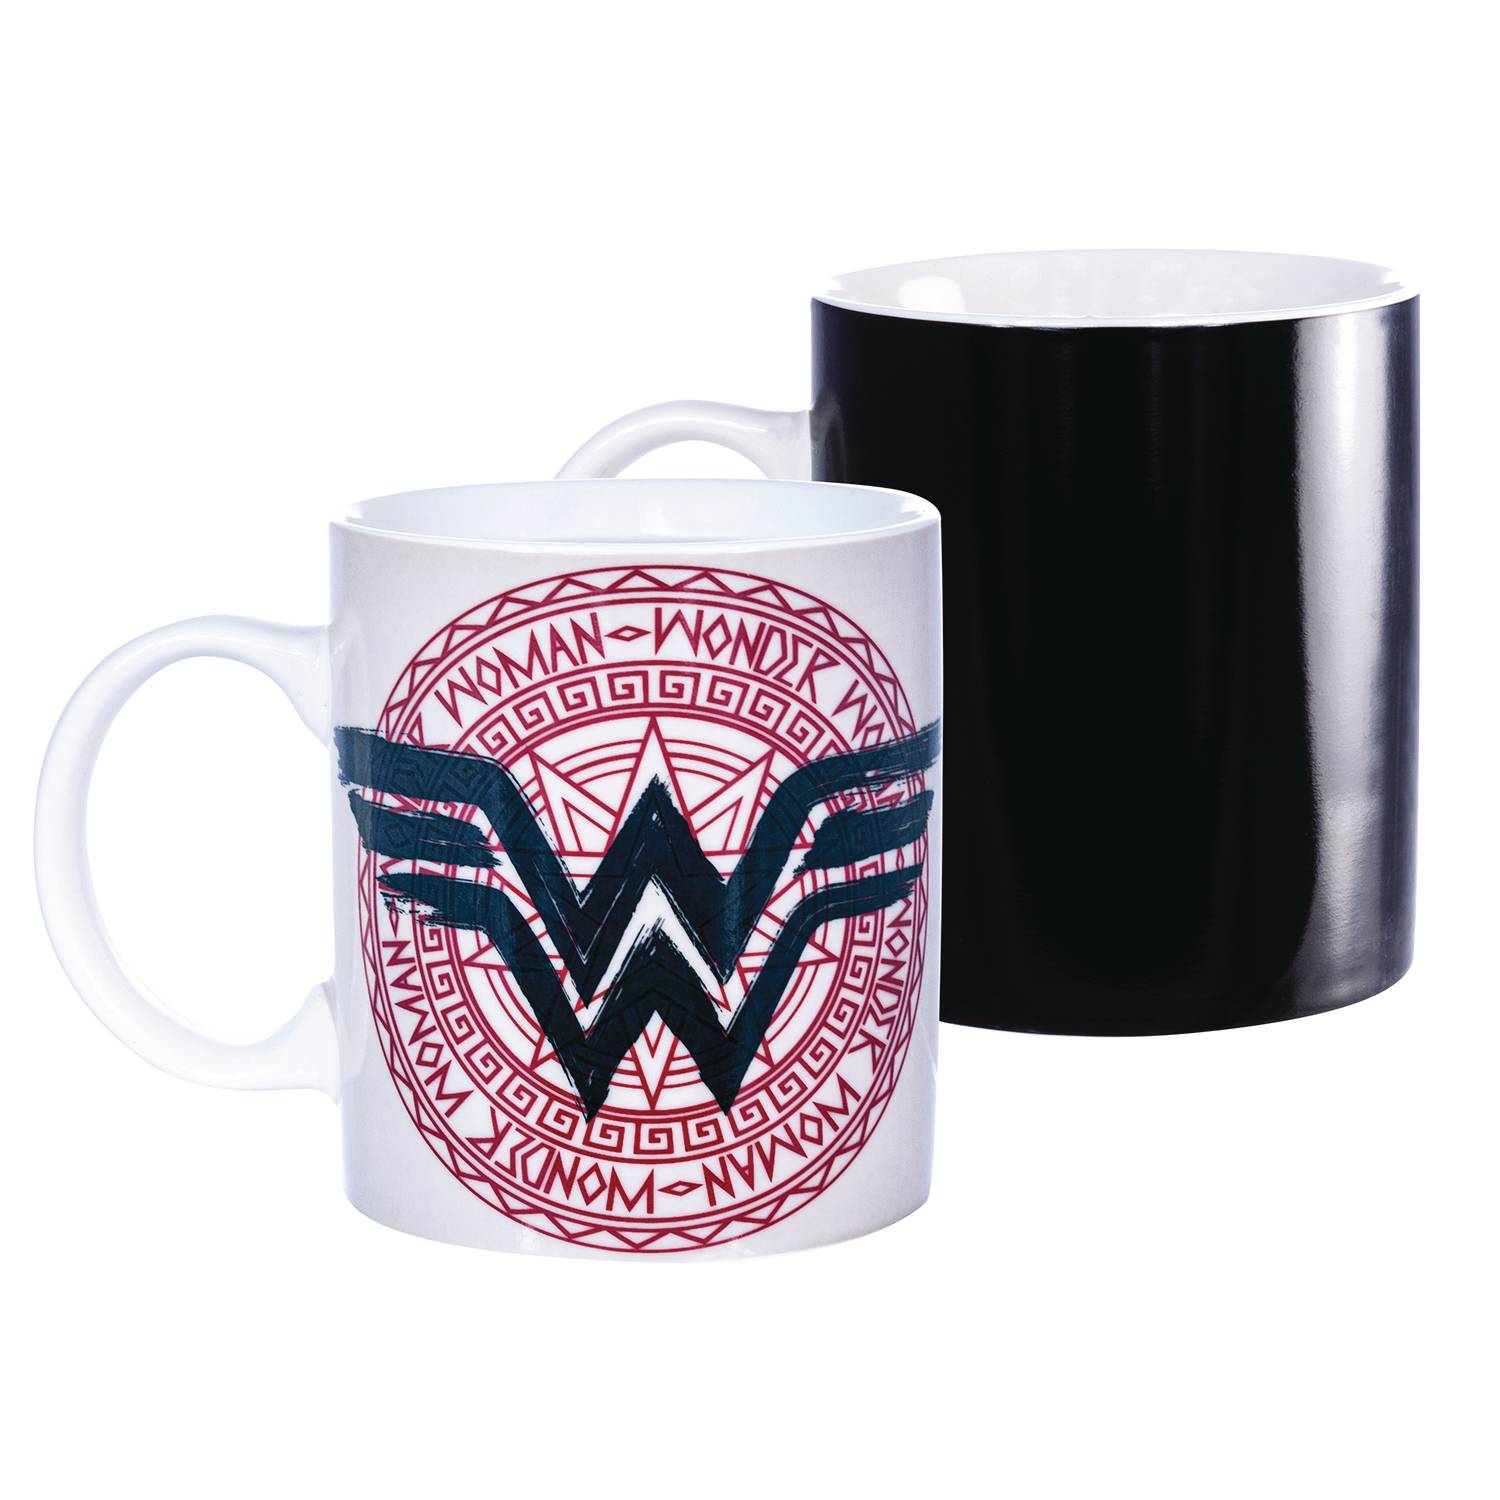 Justice League Wonder Woman Heat Reveal 110z Mug